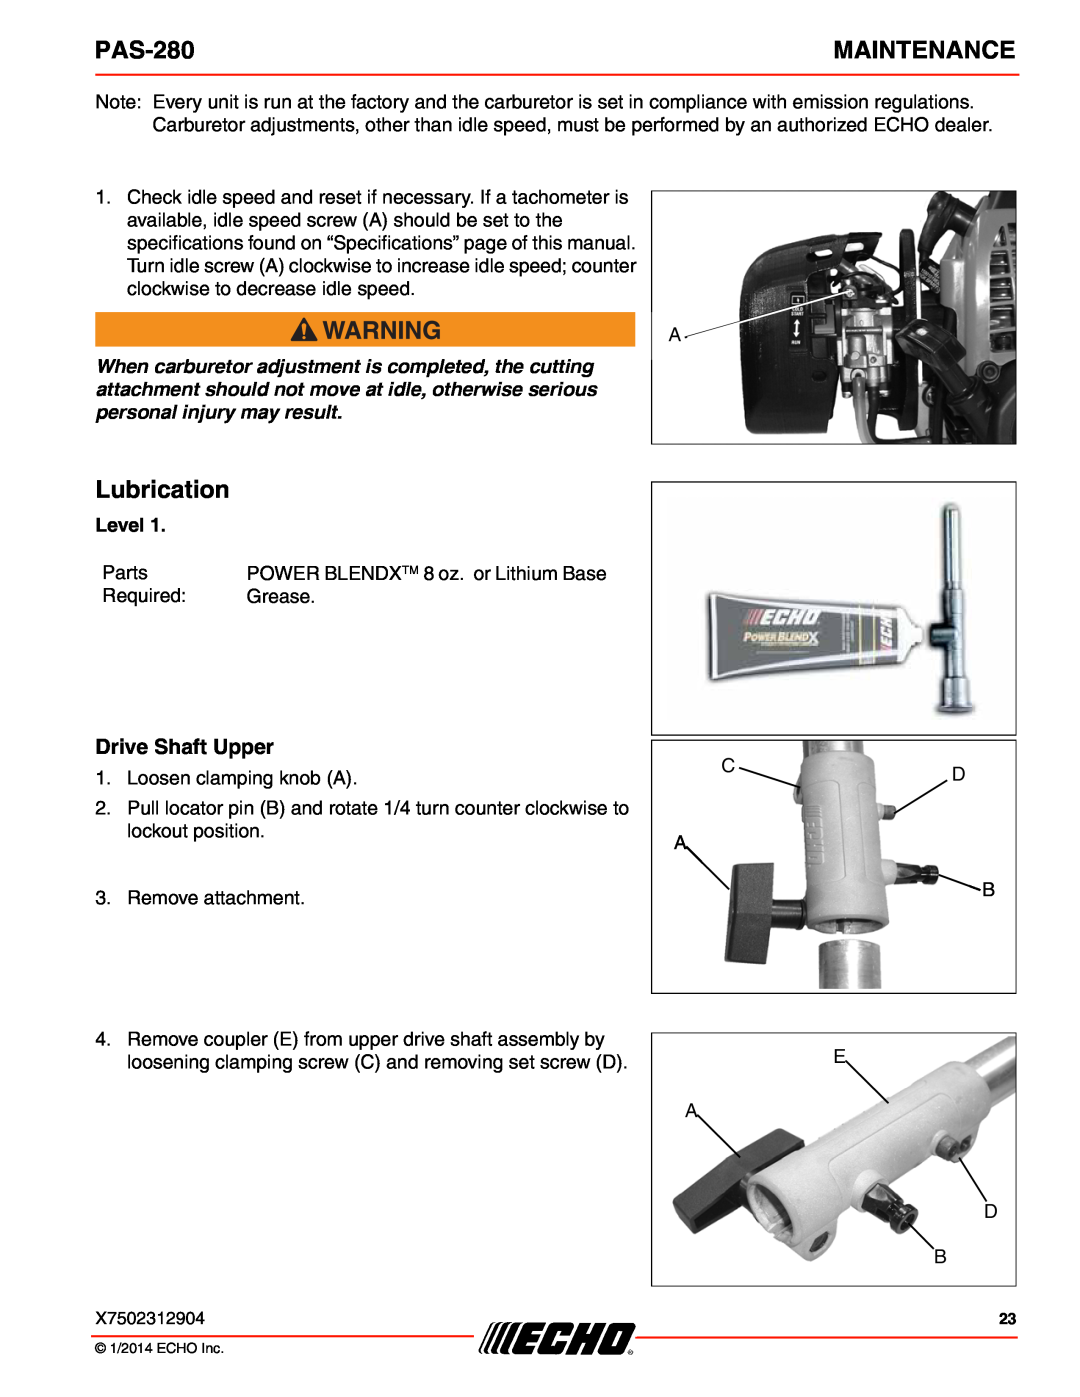 Echo PAS-280 specifications Lubrication, Drive Shaft Upper, Maintenance, Level 